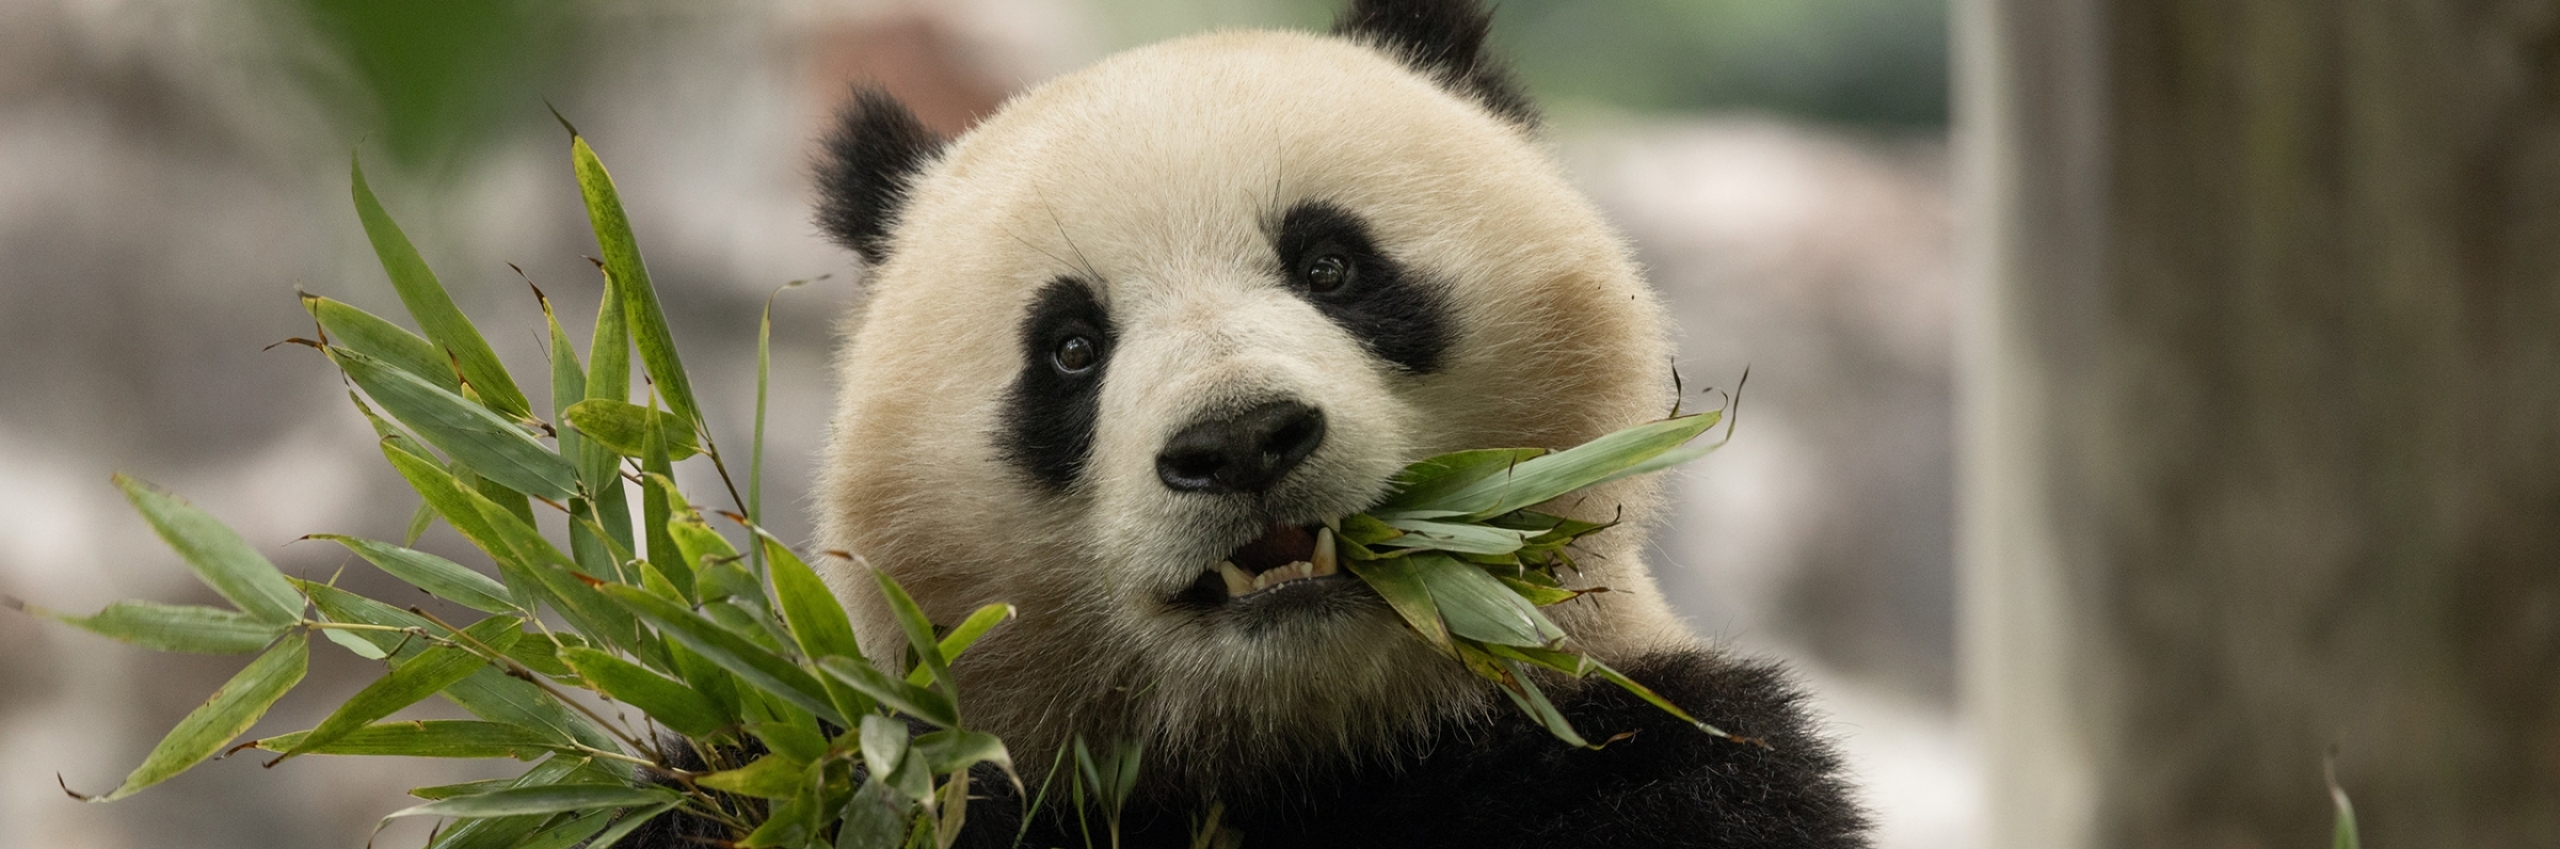 A giant panda sits eating bamboo.